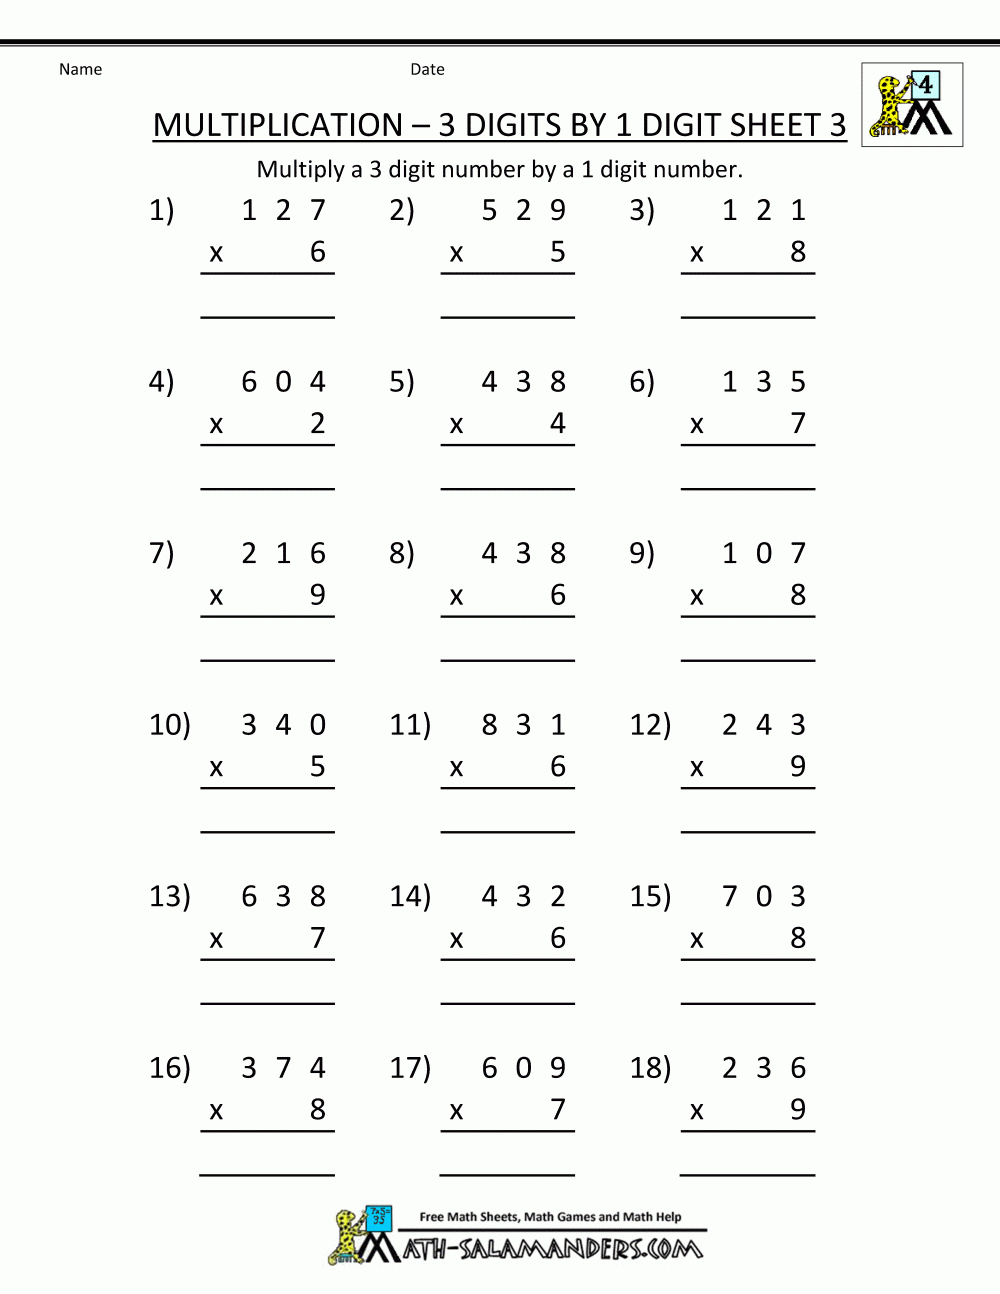 Free Math Sheets Multiplication 3 Digits1 Digit 3 | Math with Multiplication Worksheets No Carrying